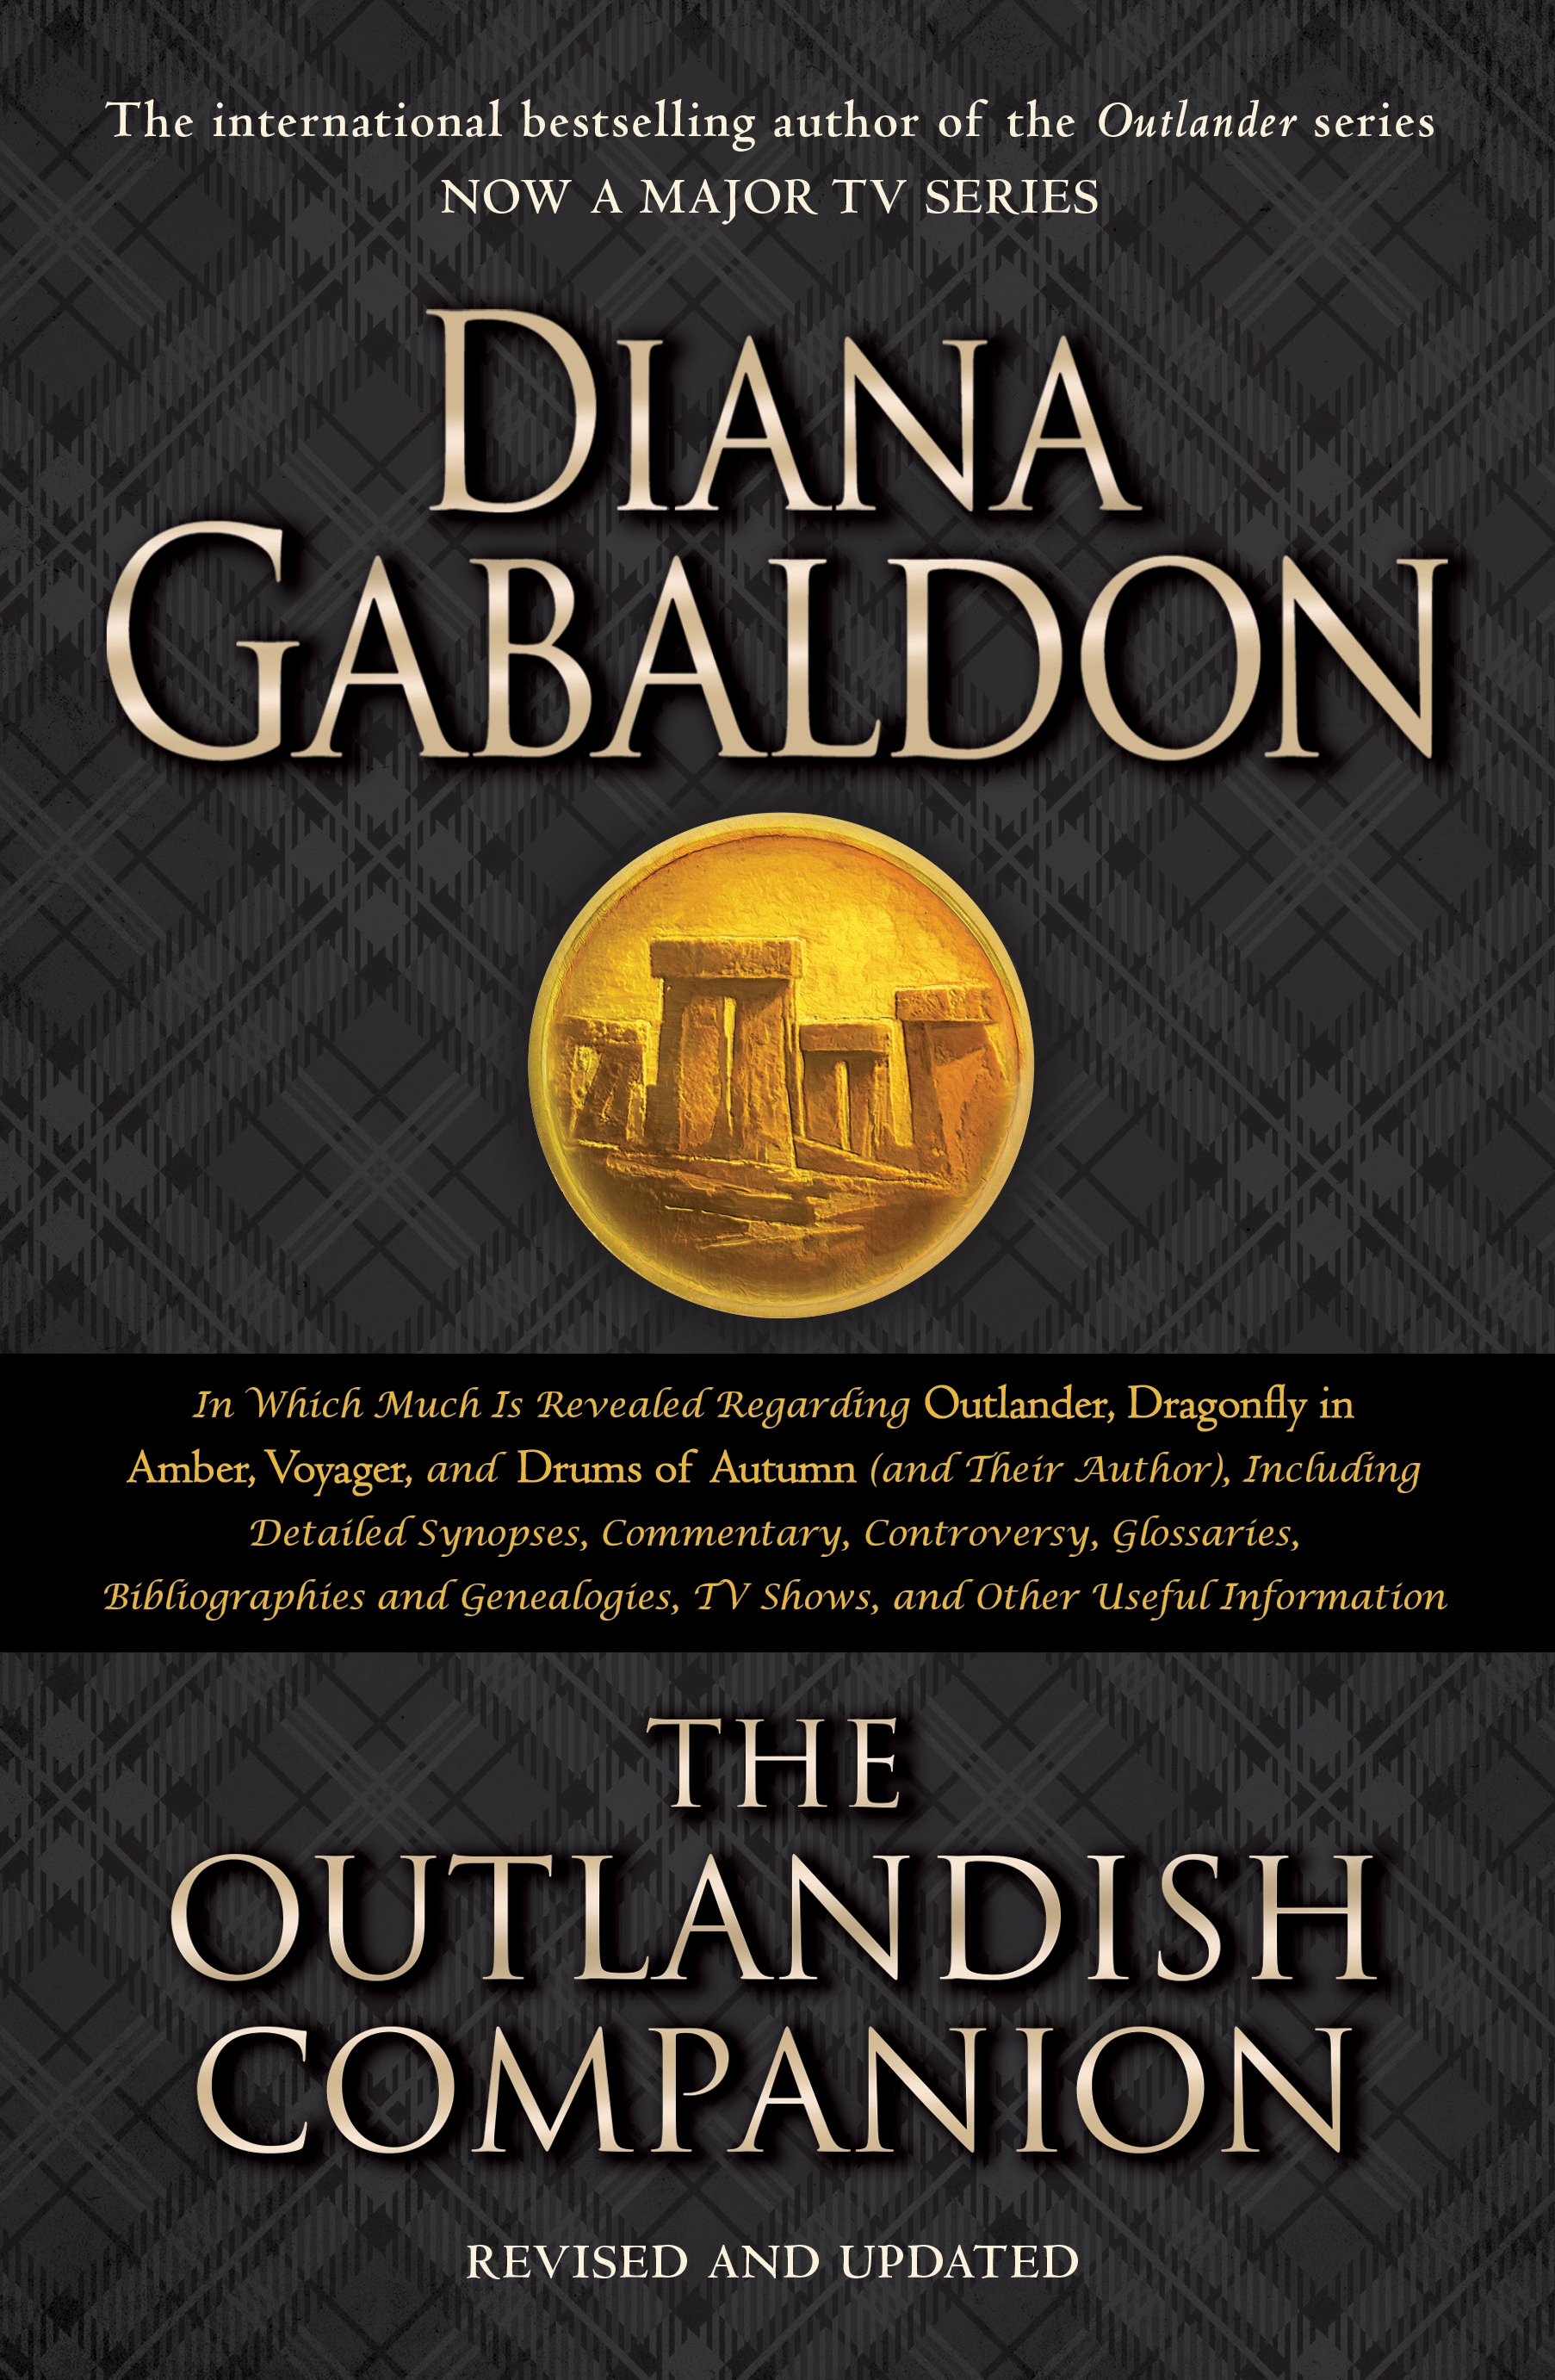 Diana Gabaldon: The outlandish companion (2015)